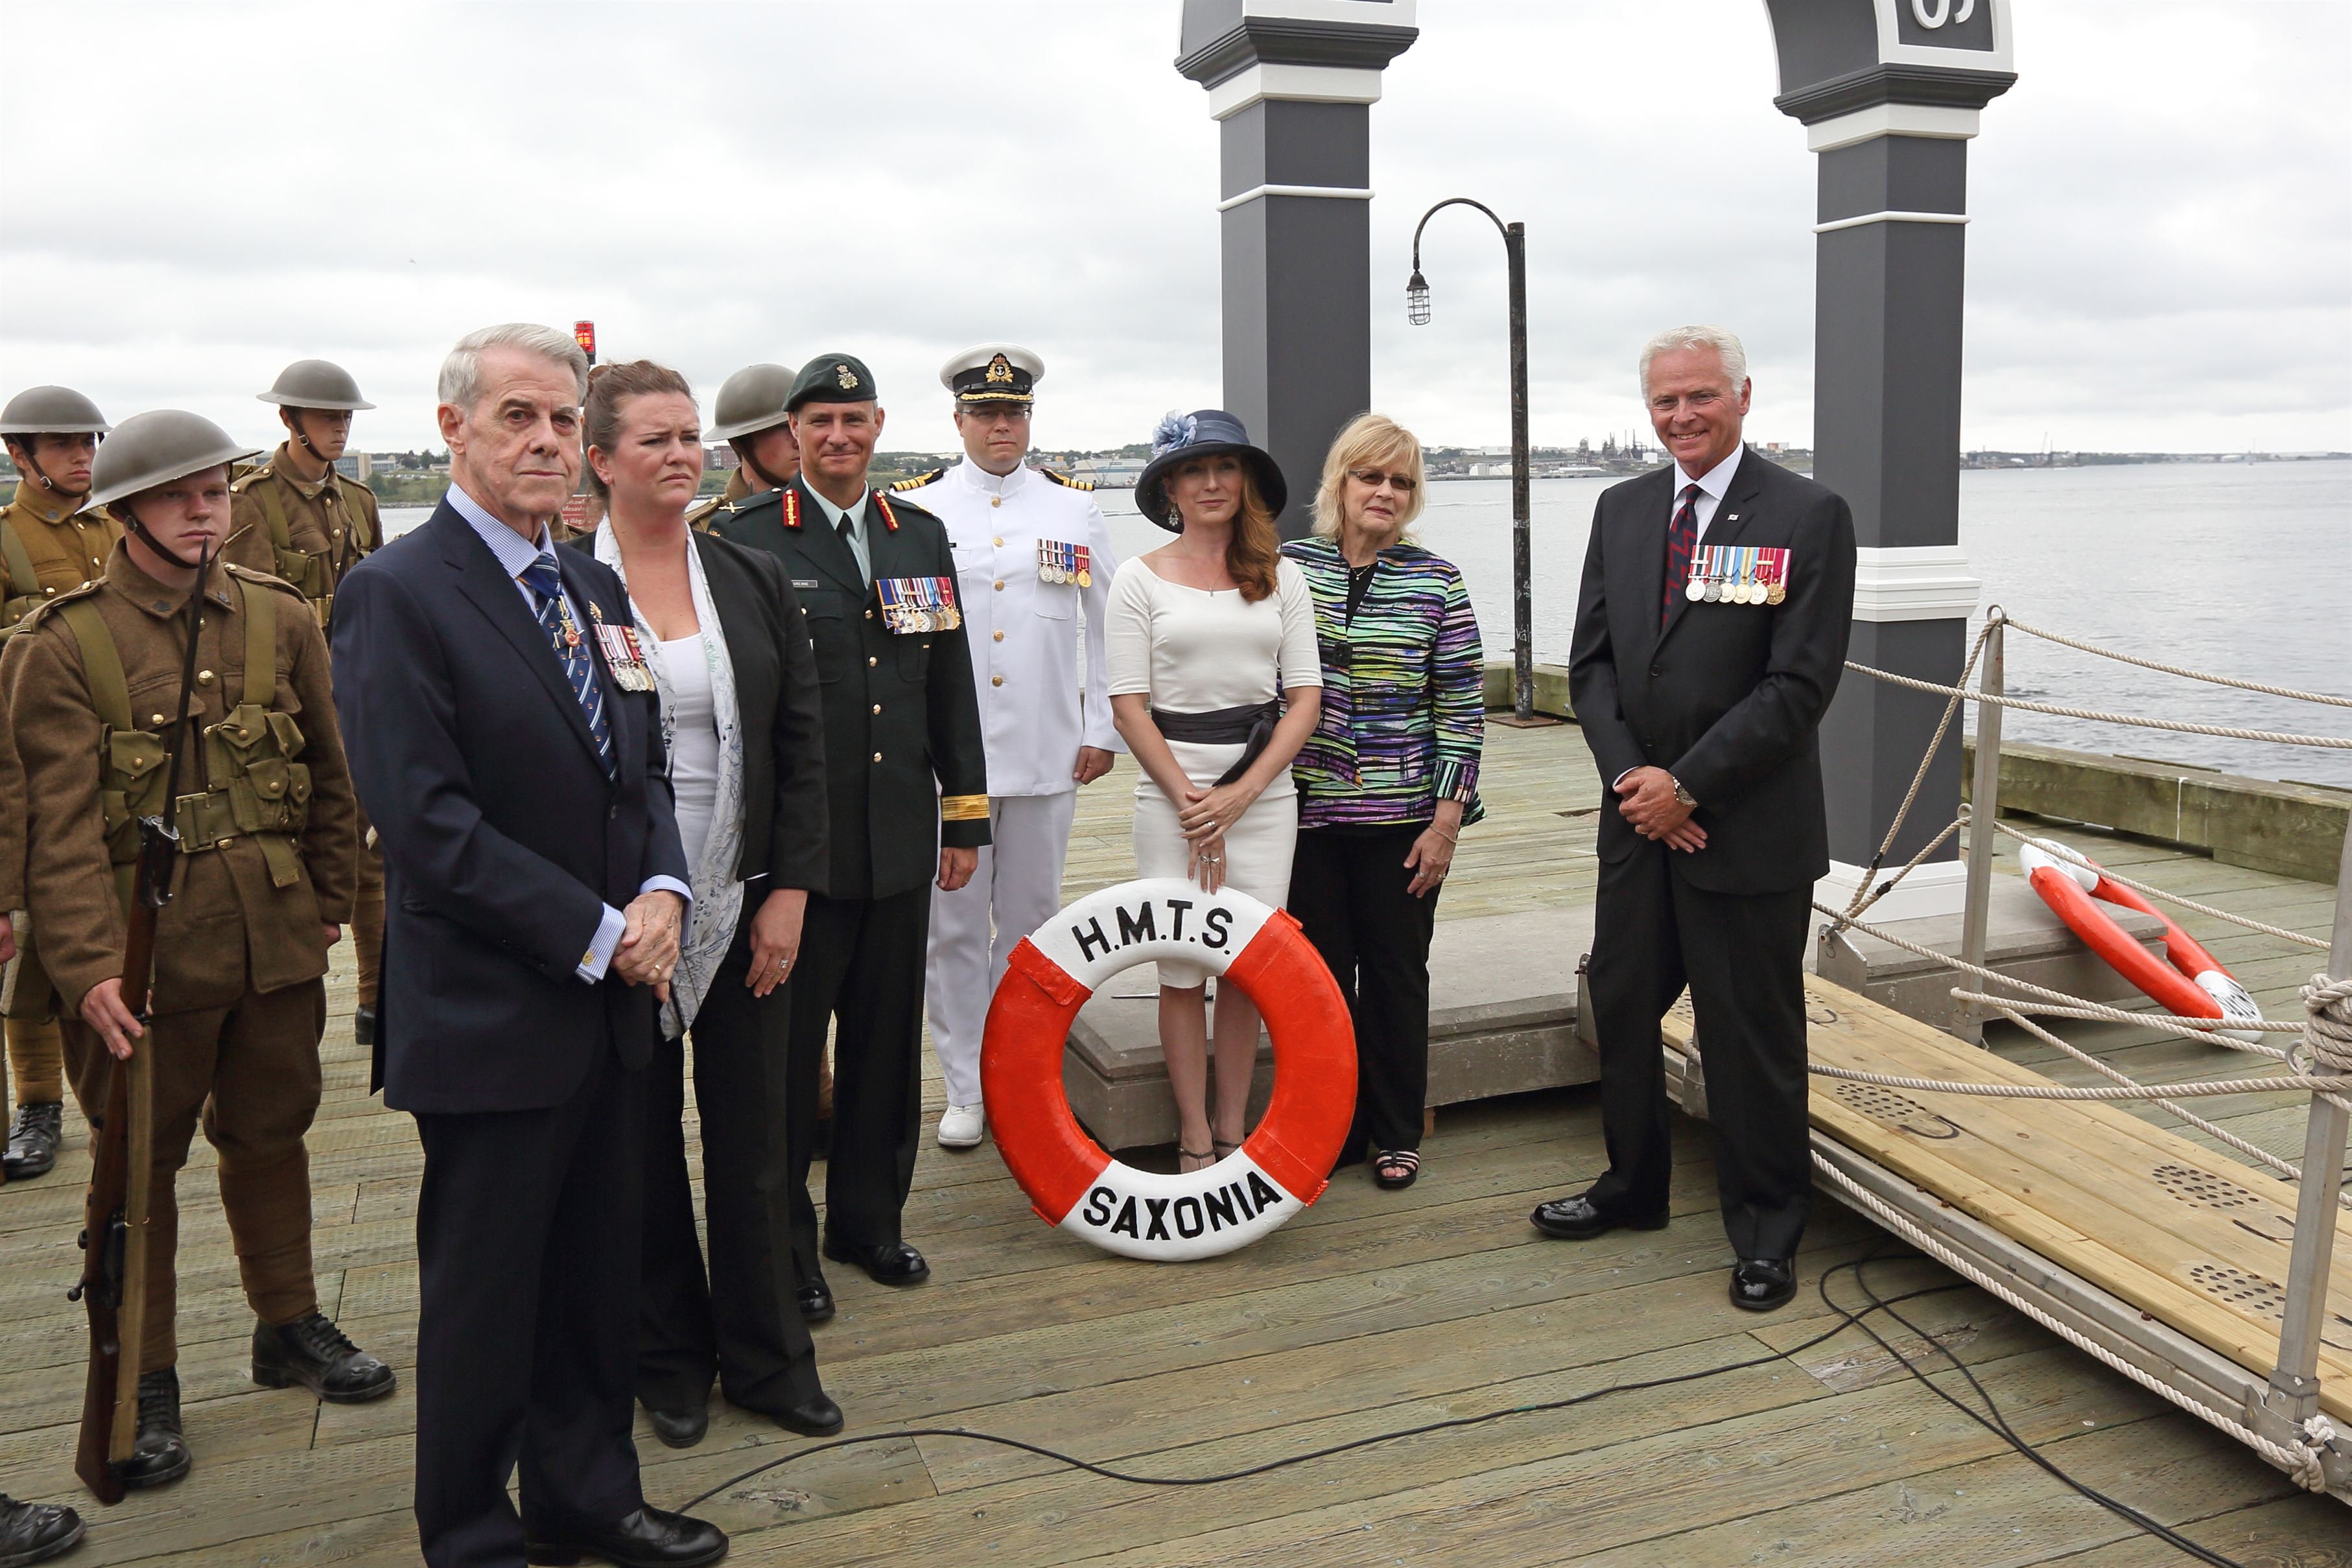 His Honour, Brigadier-General the Honourable J.J. Grant, Lieutenant Governor of Nova Scotia unveiled the memorial on 26 August 2016.